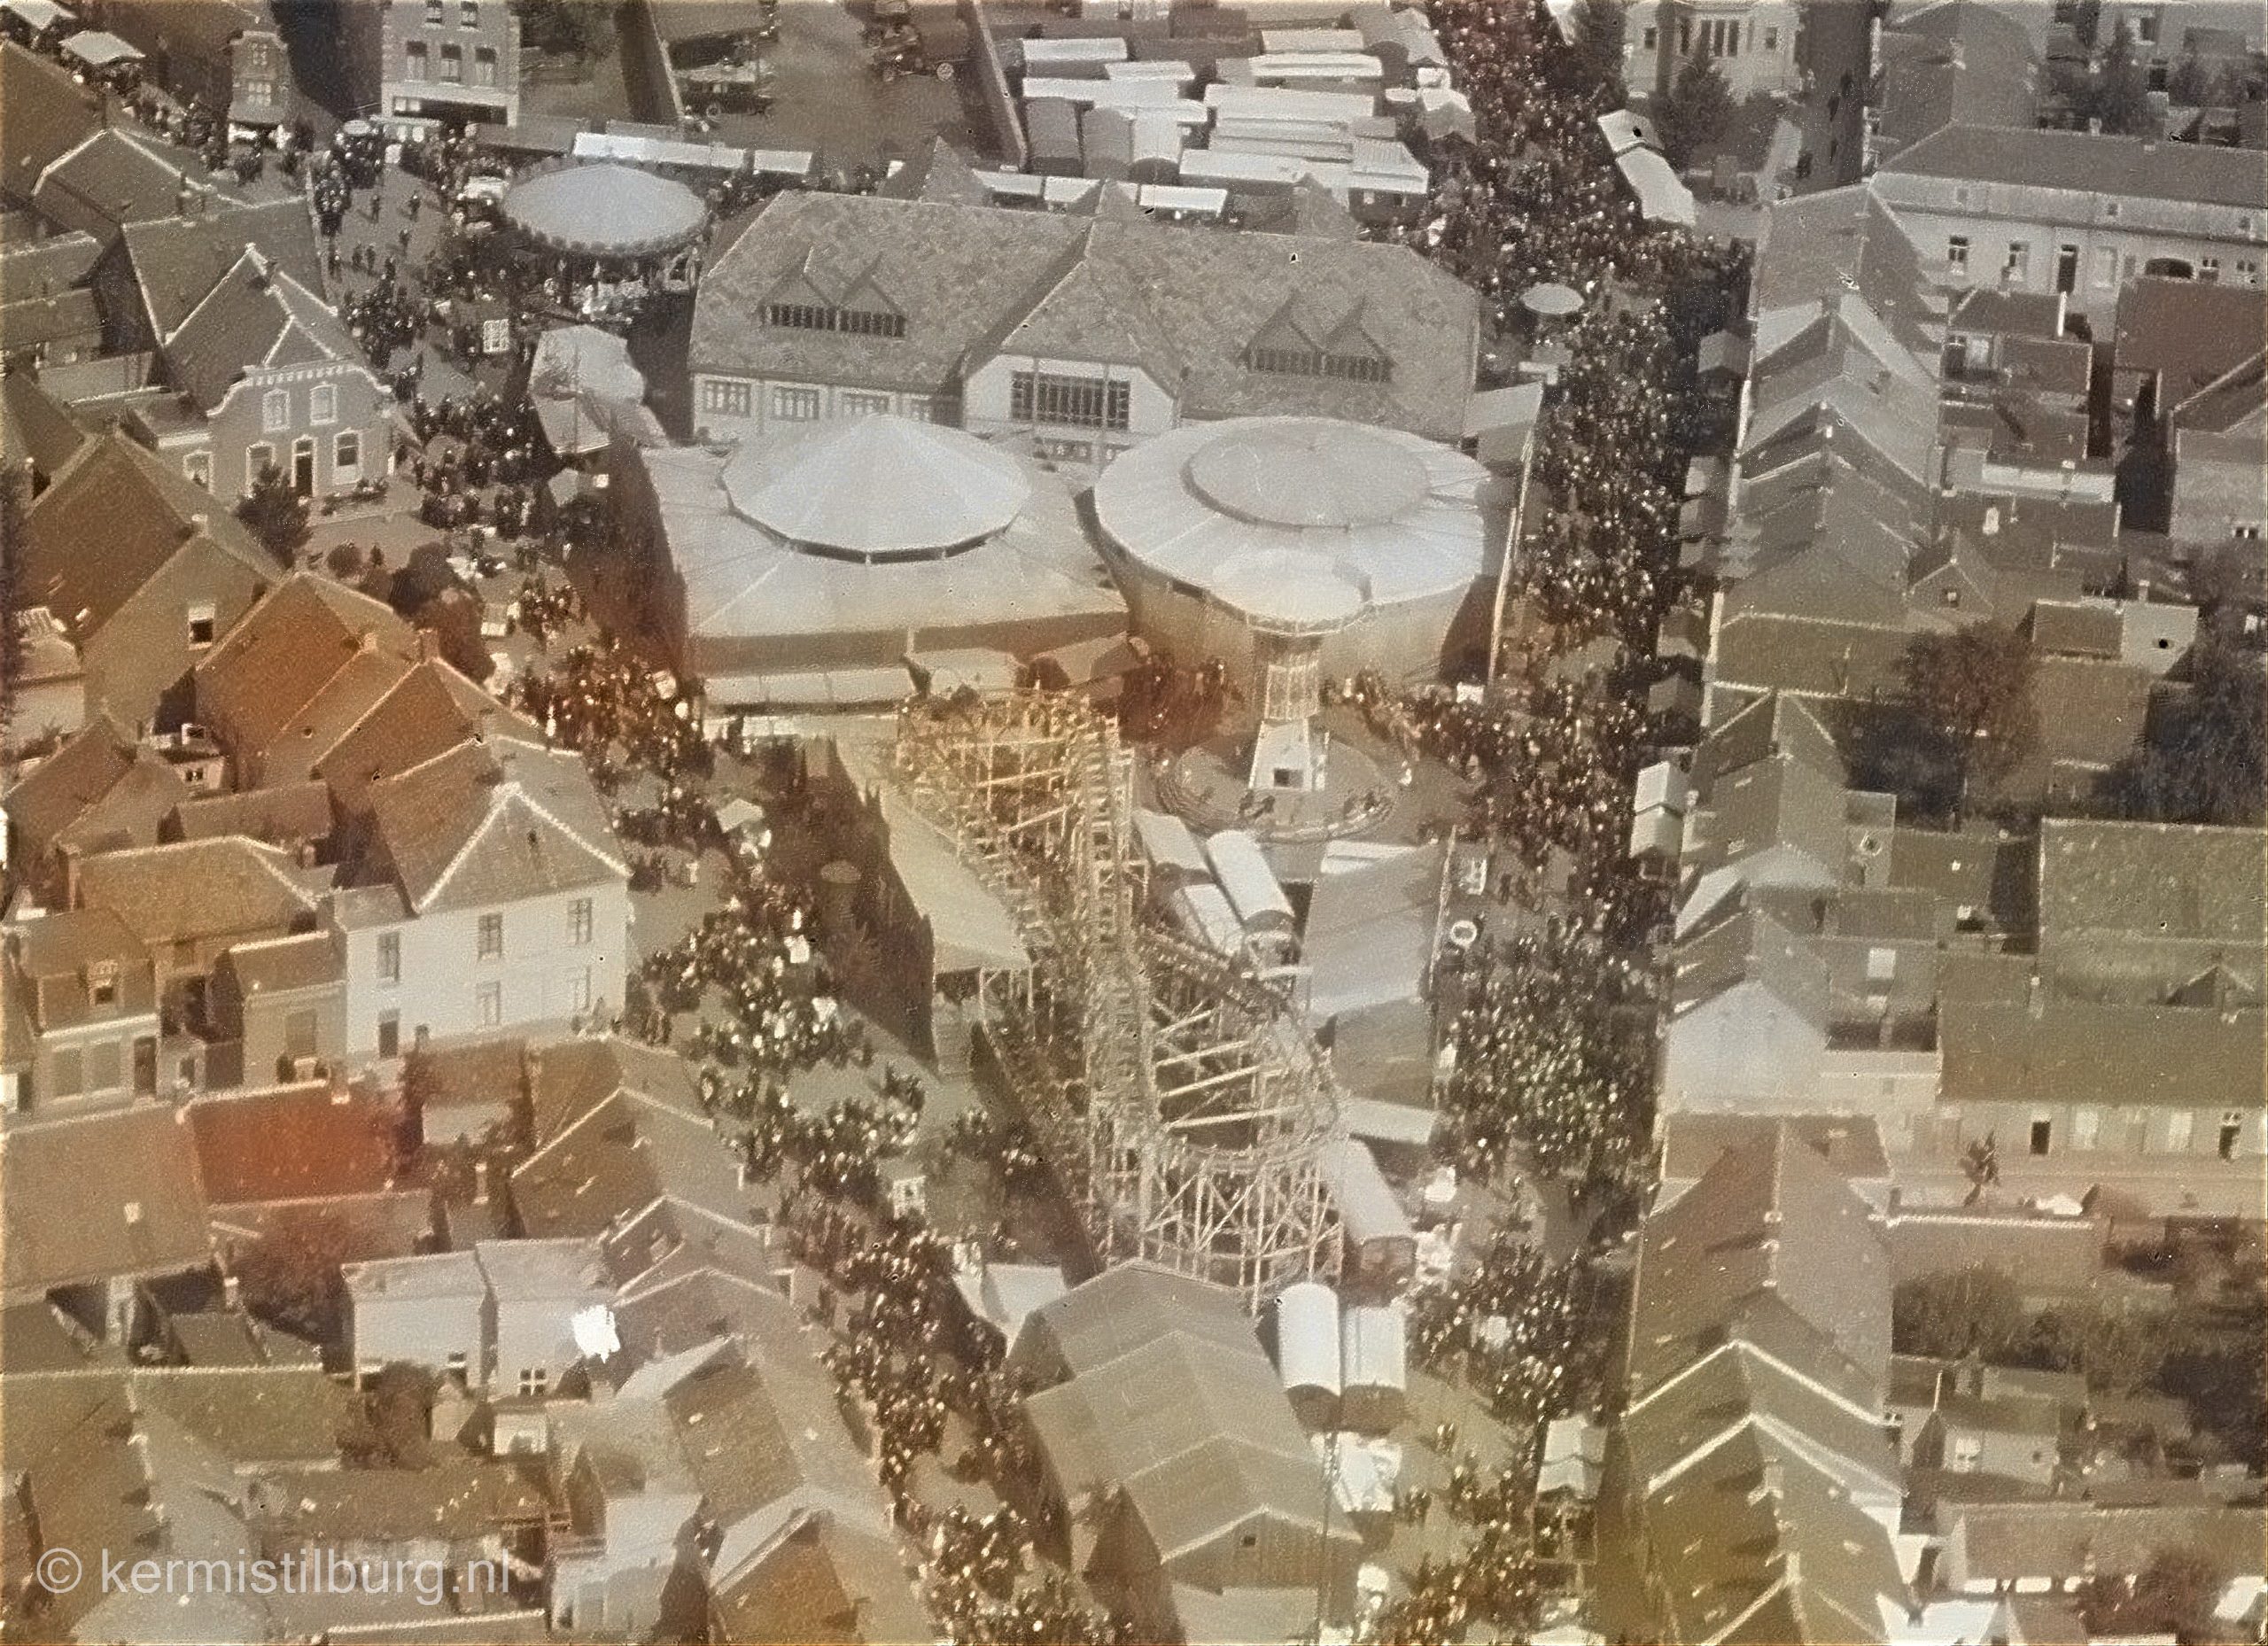 1923, Kermis, Tilburg, Tilburgse kermis